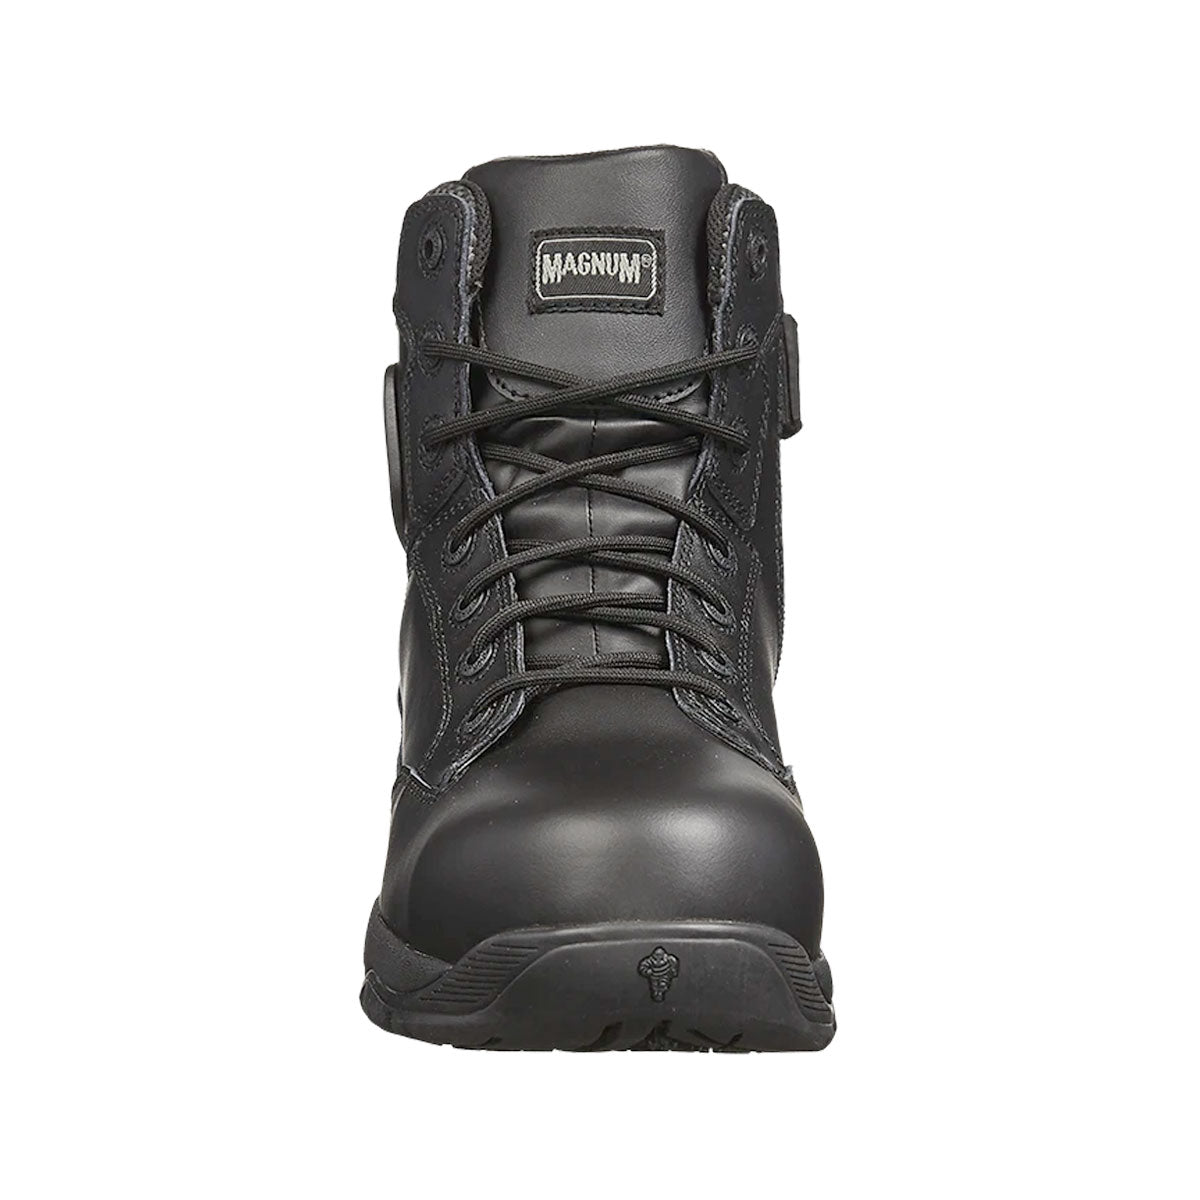 Magnum Strike Force 6.0 Leather Side-Zip Composite Toe Waterproof Boot Black Footwear Magnum Footwear Tactical Gear Supplier Tactical Distributors Australia